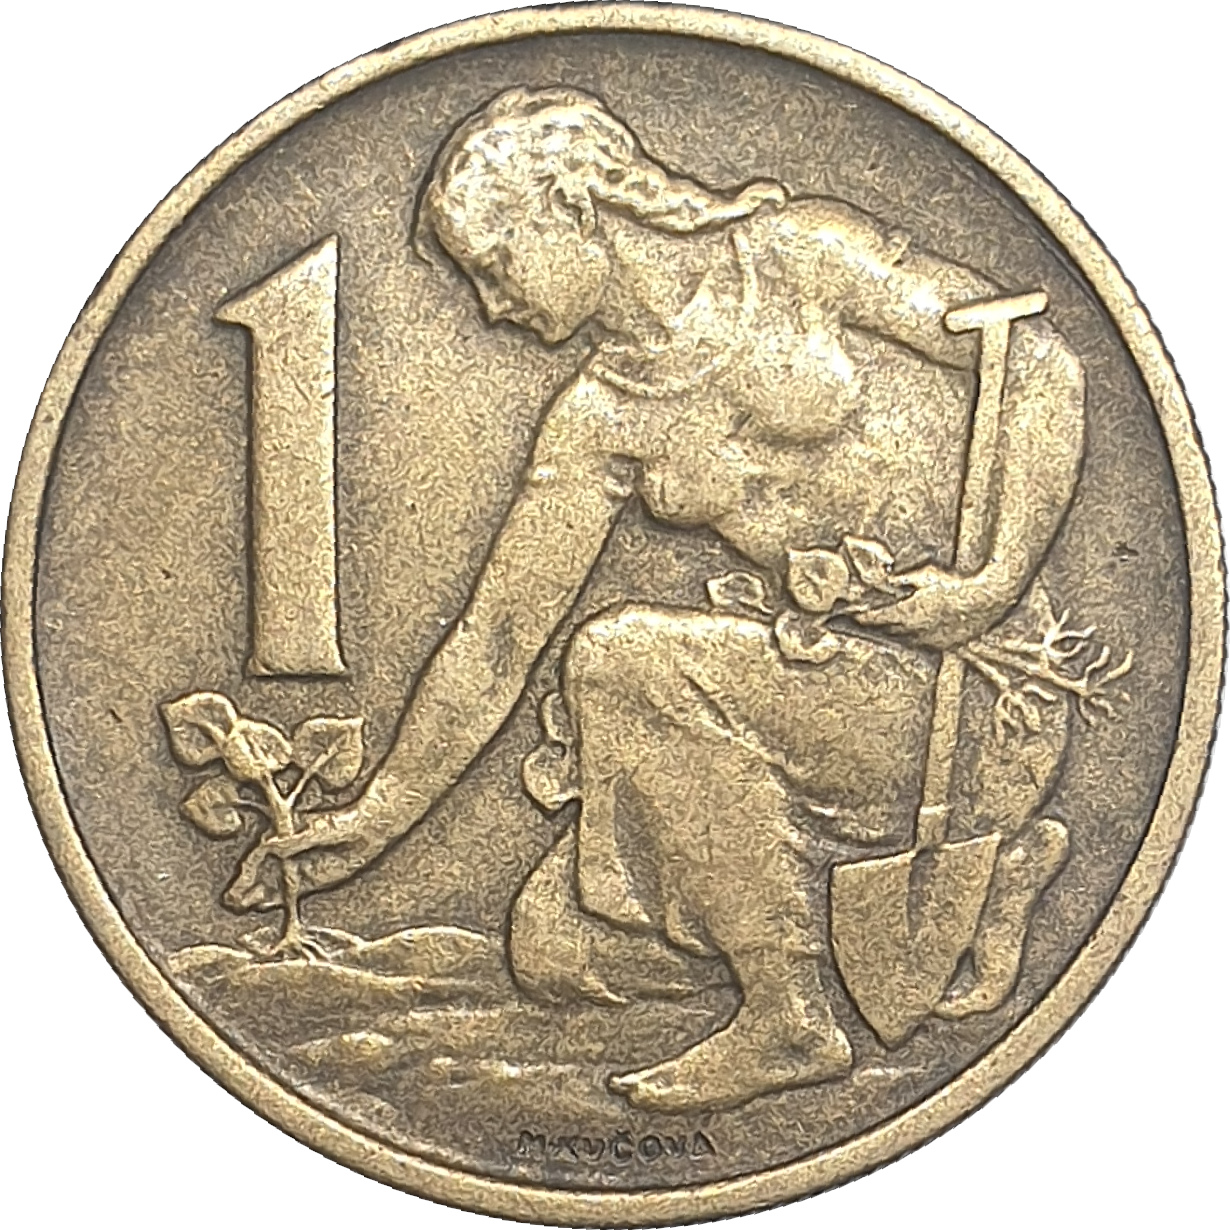 1 koruna - Free Heraldic Lion